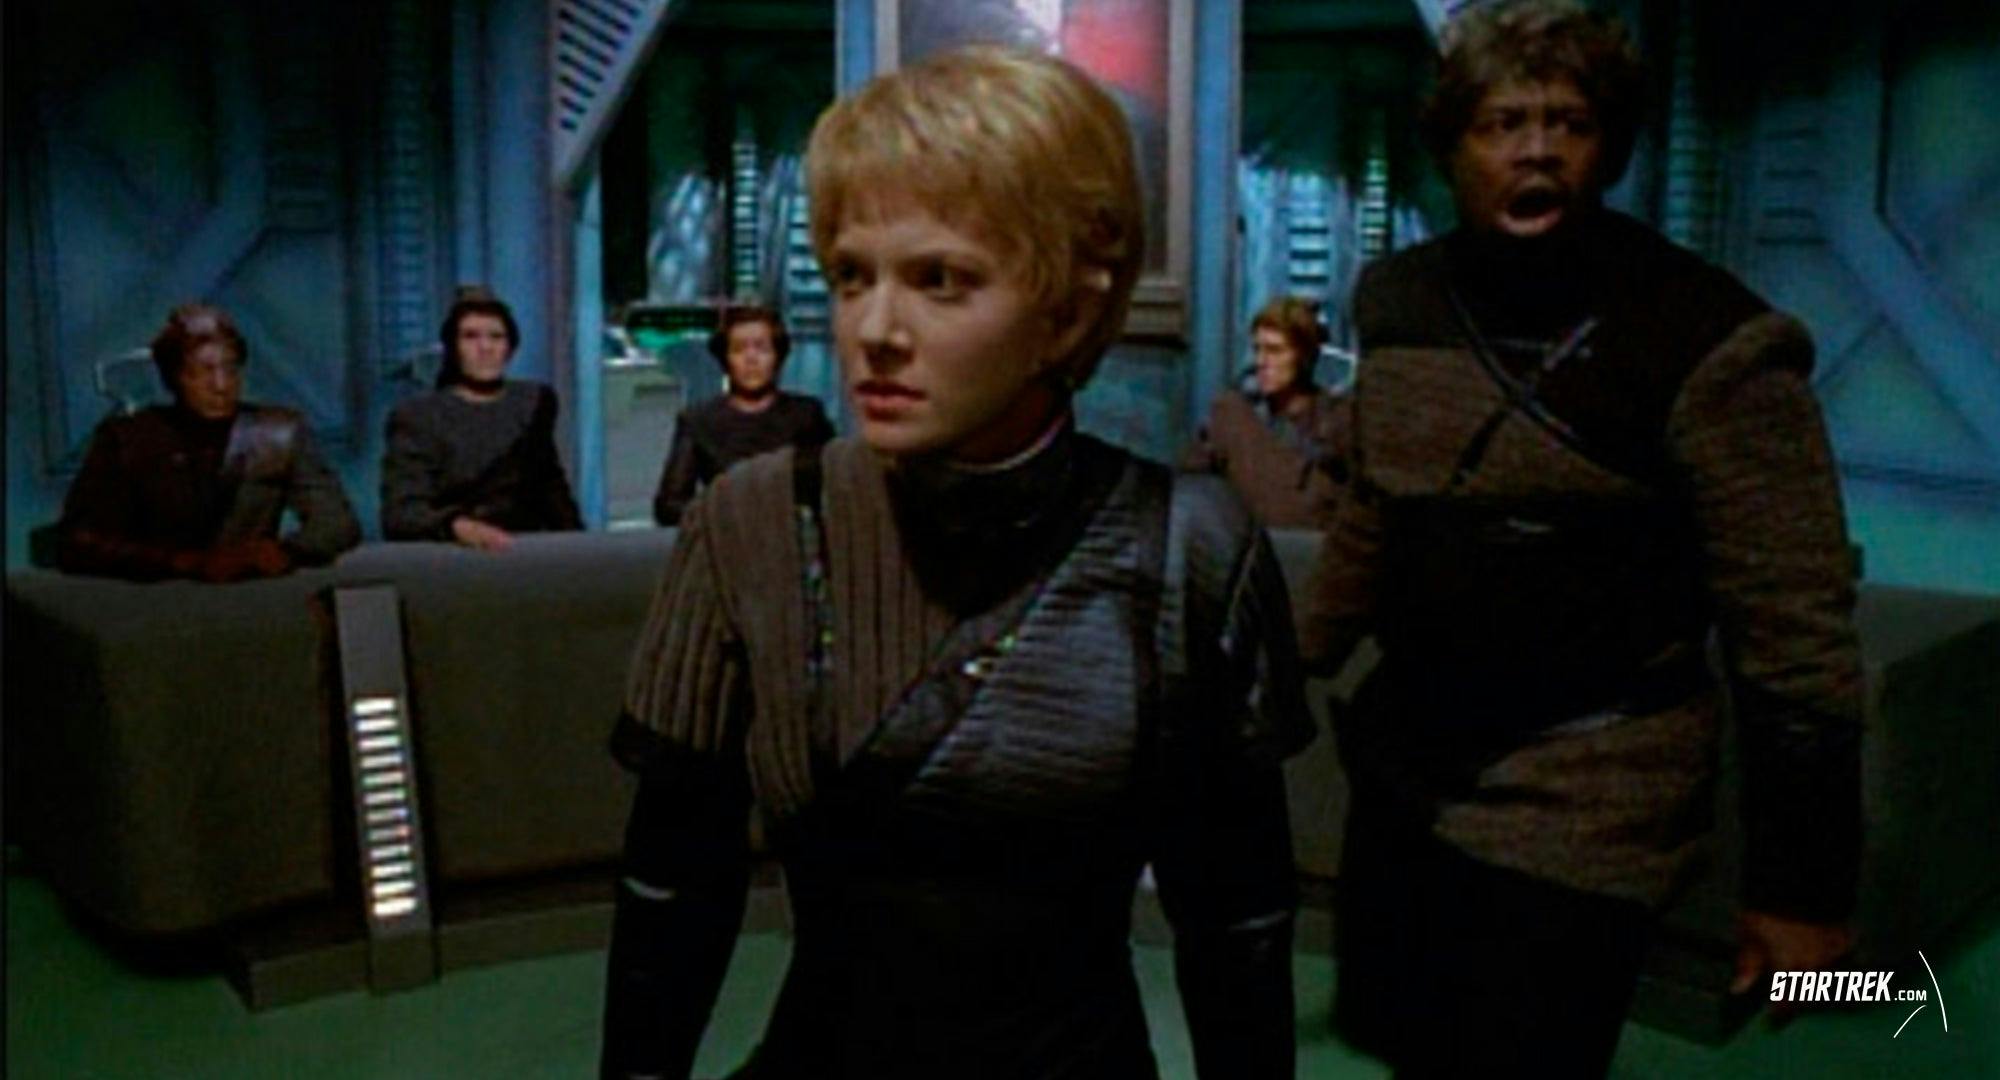 Star Trek: Voyager - Kes